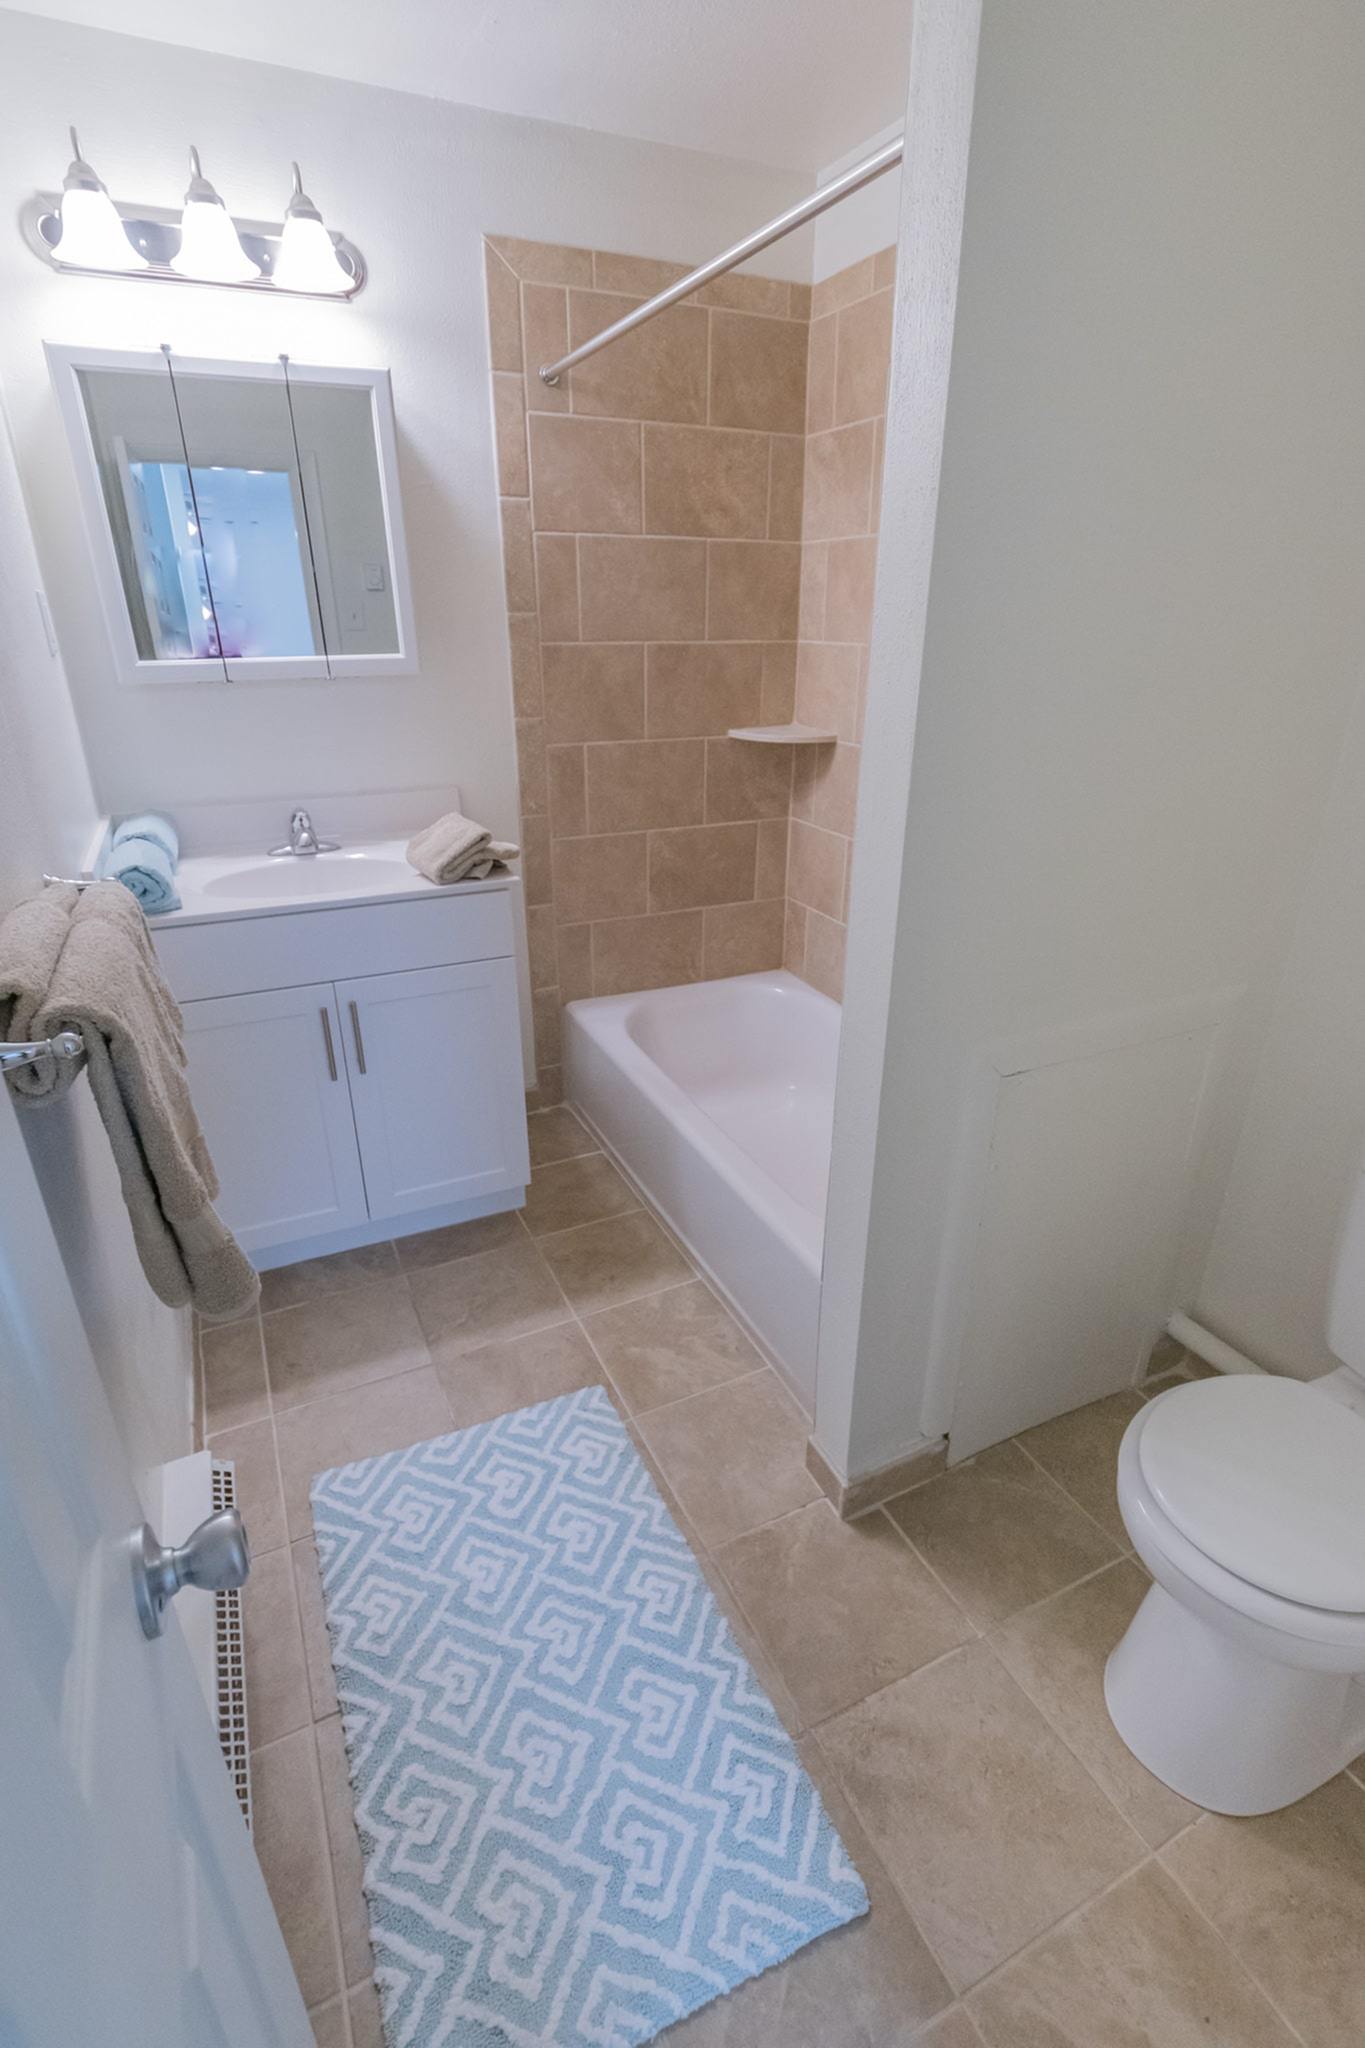 Bathroom with a mirror, bathtub, toilet, and beige tiles.